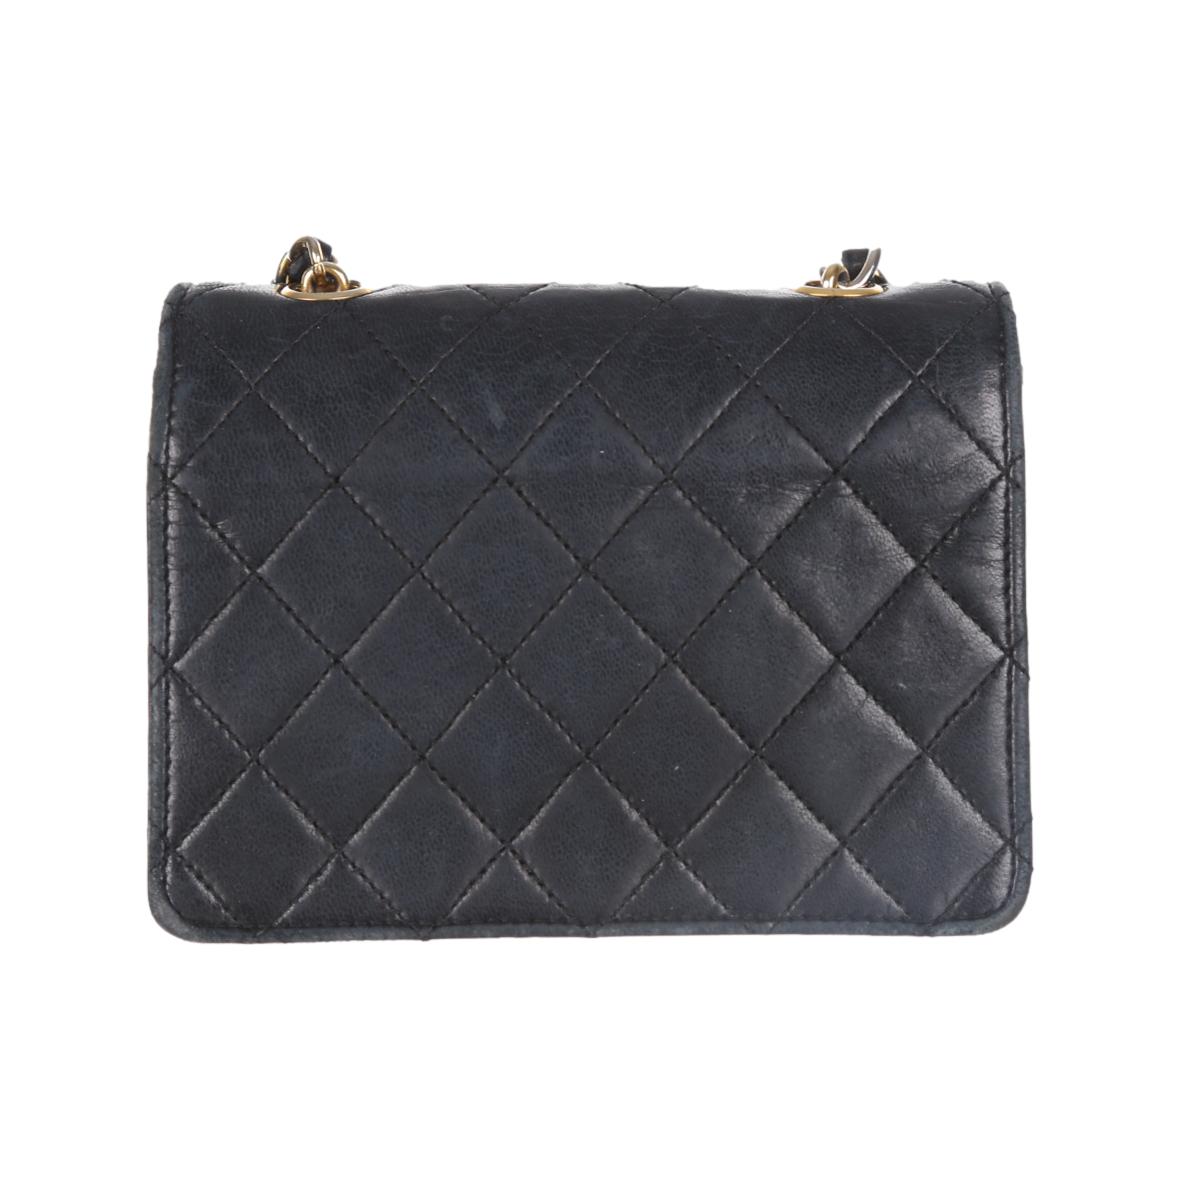 Chanel Black Quilted Mini Flap Bag - Handbags